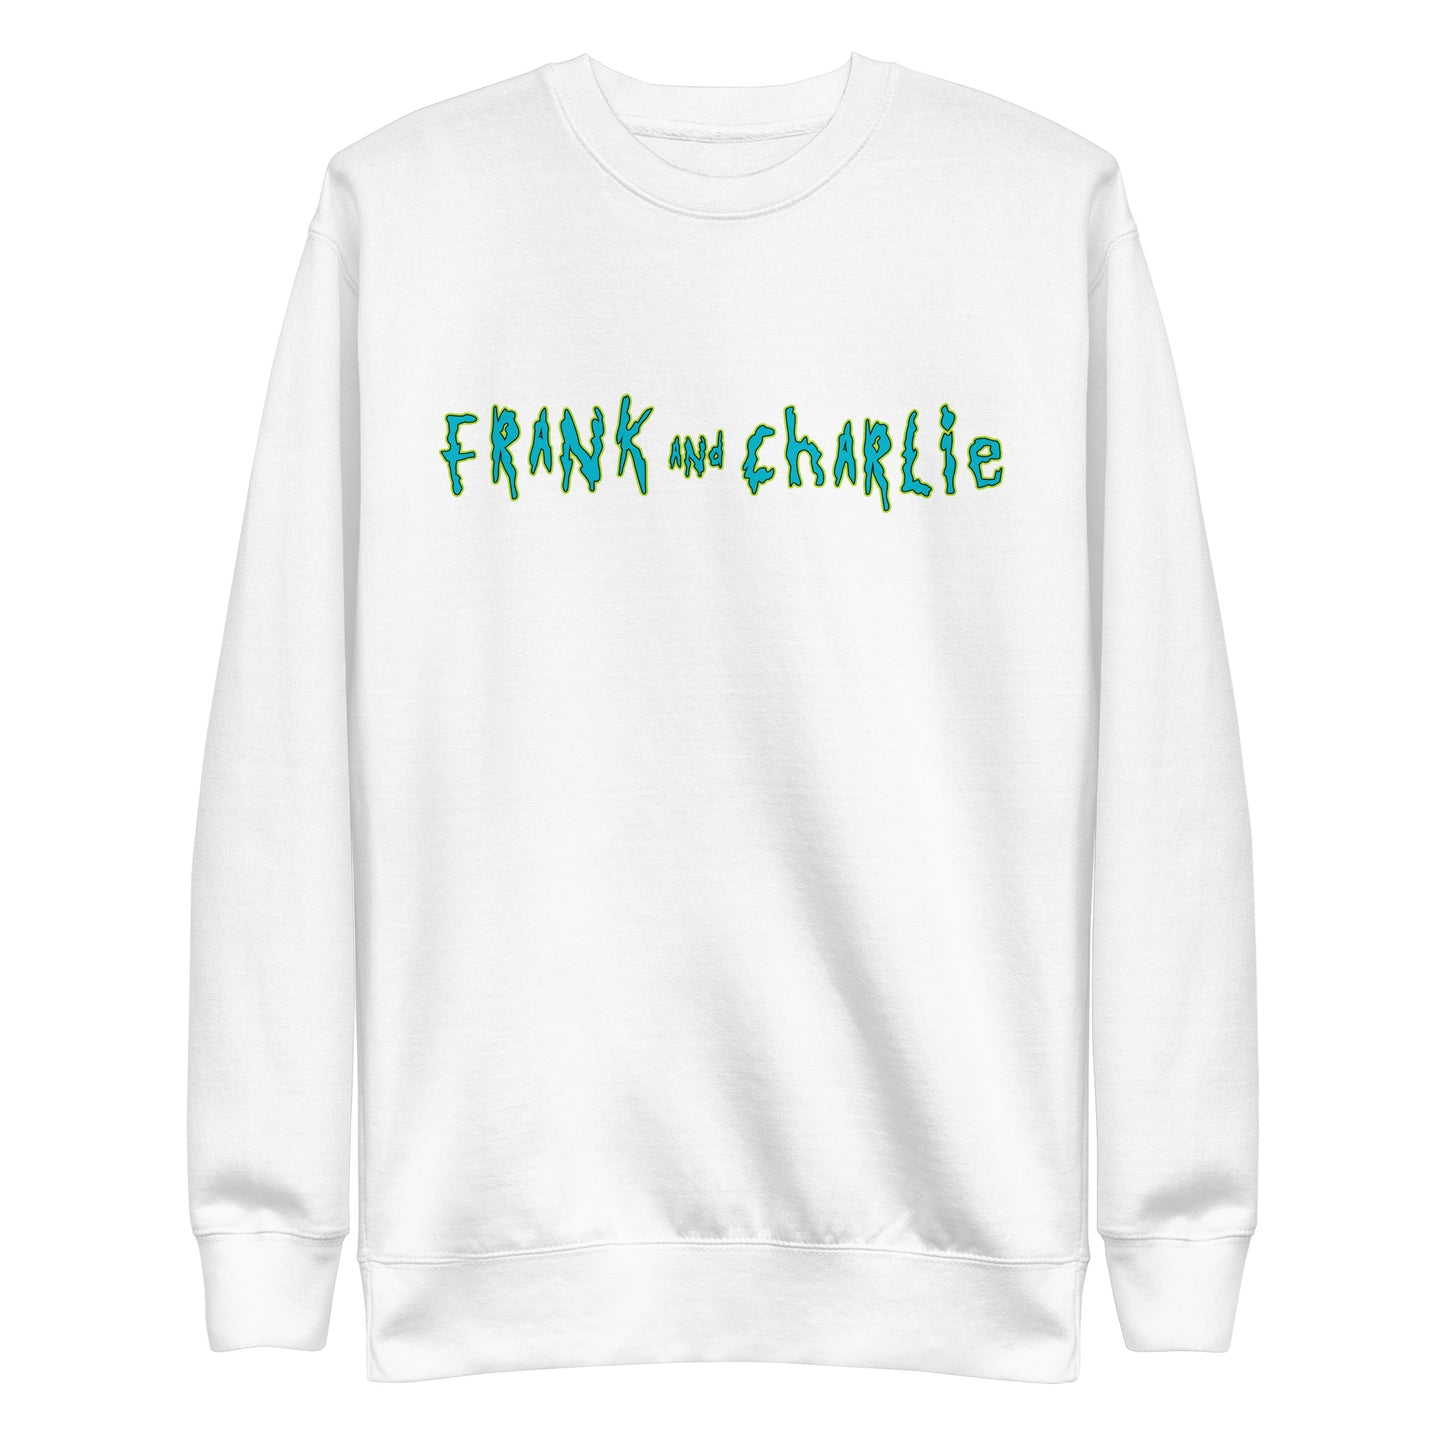 Frank and Charlie (Rick and Morty Parody) Unisex Premium Sweatshirt